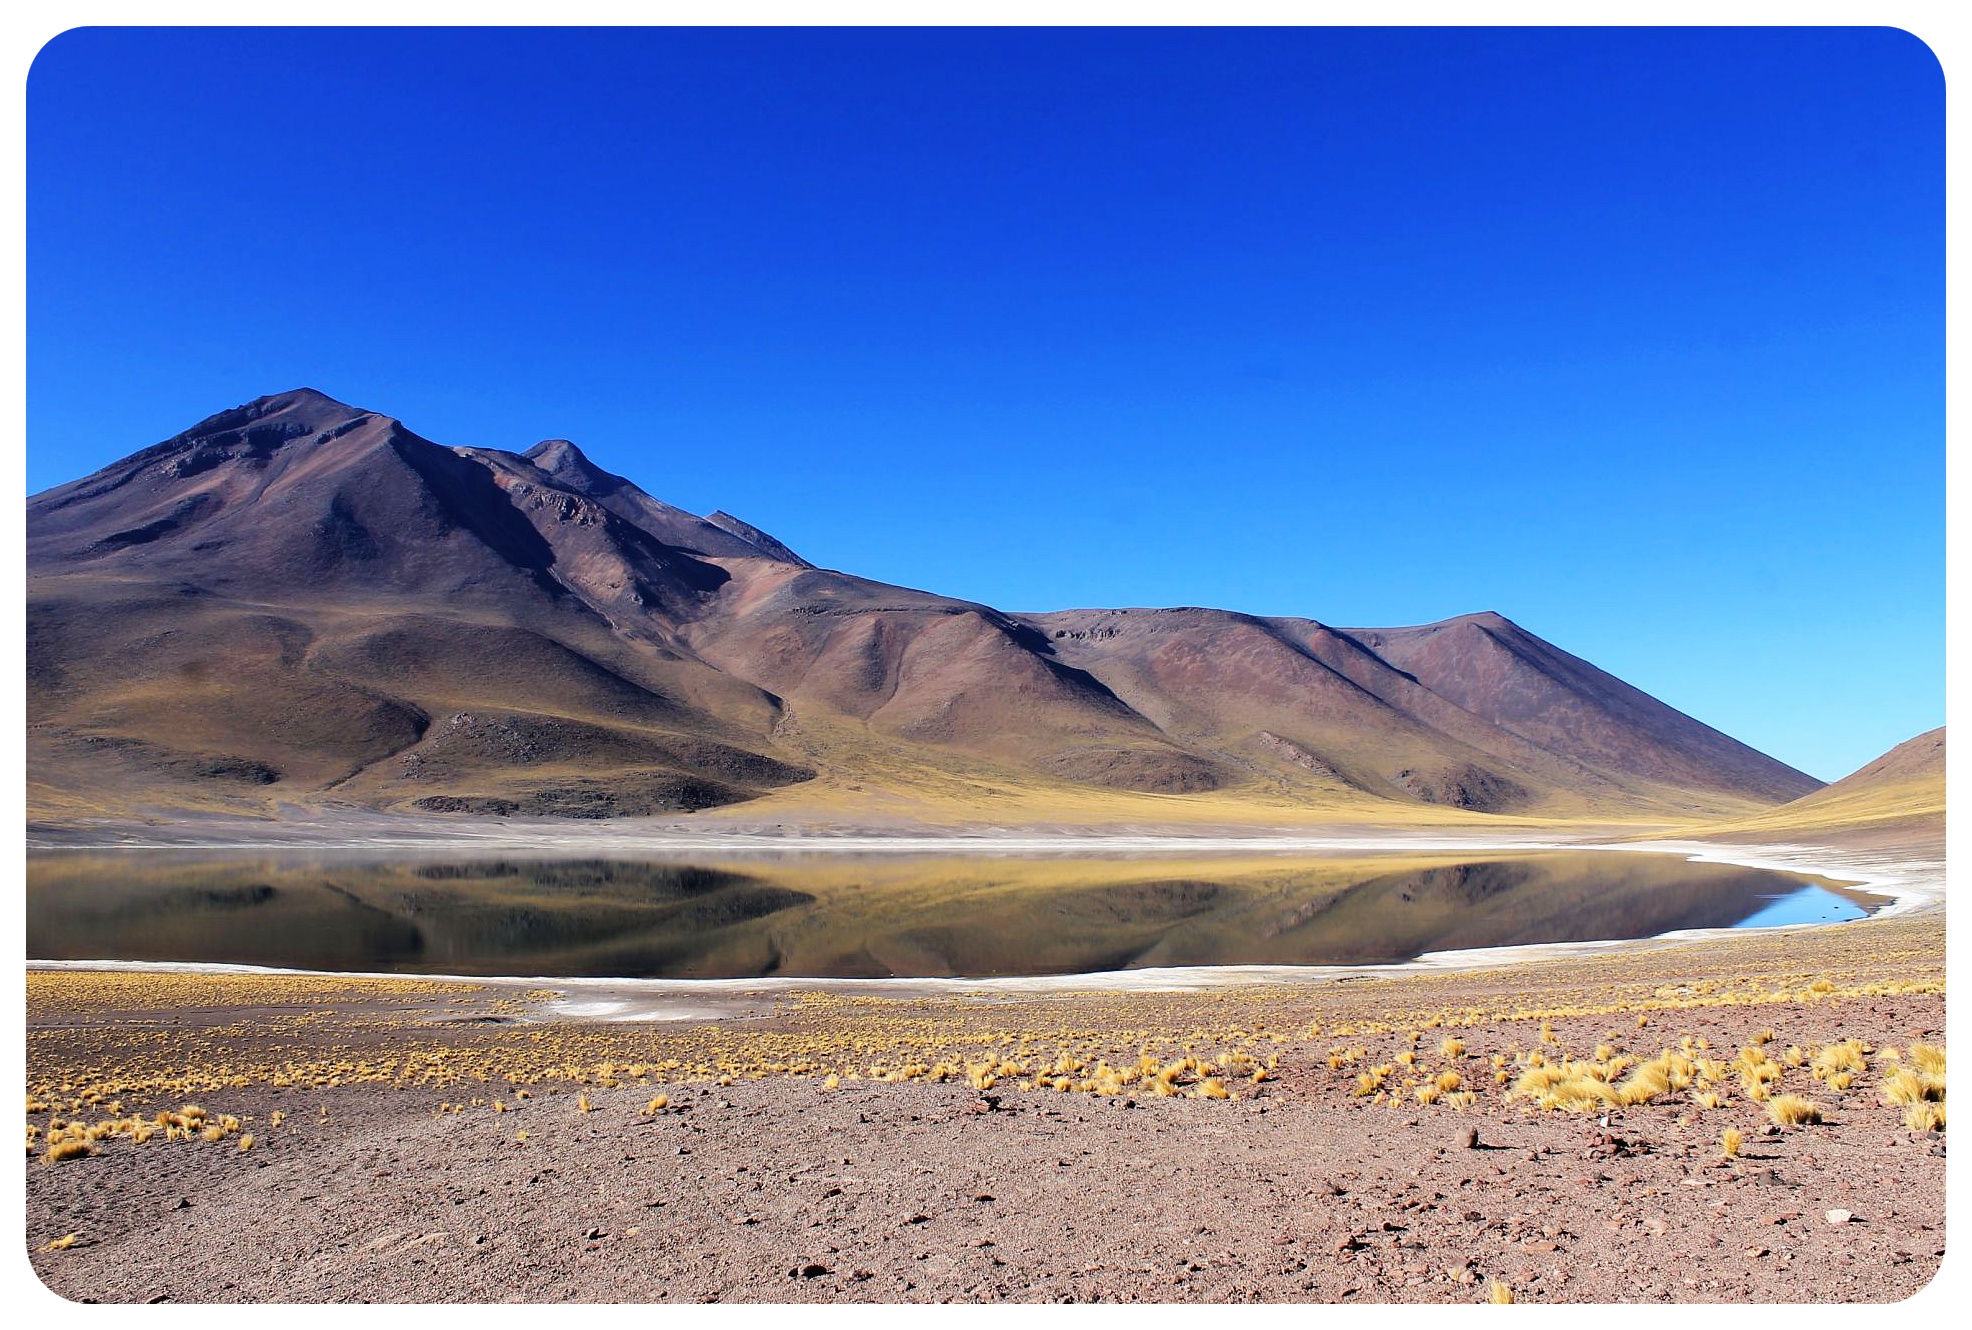 The otherworldly landscapes of Chile’s Atacama Desert